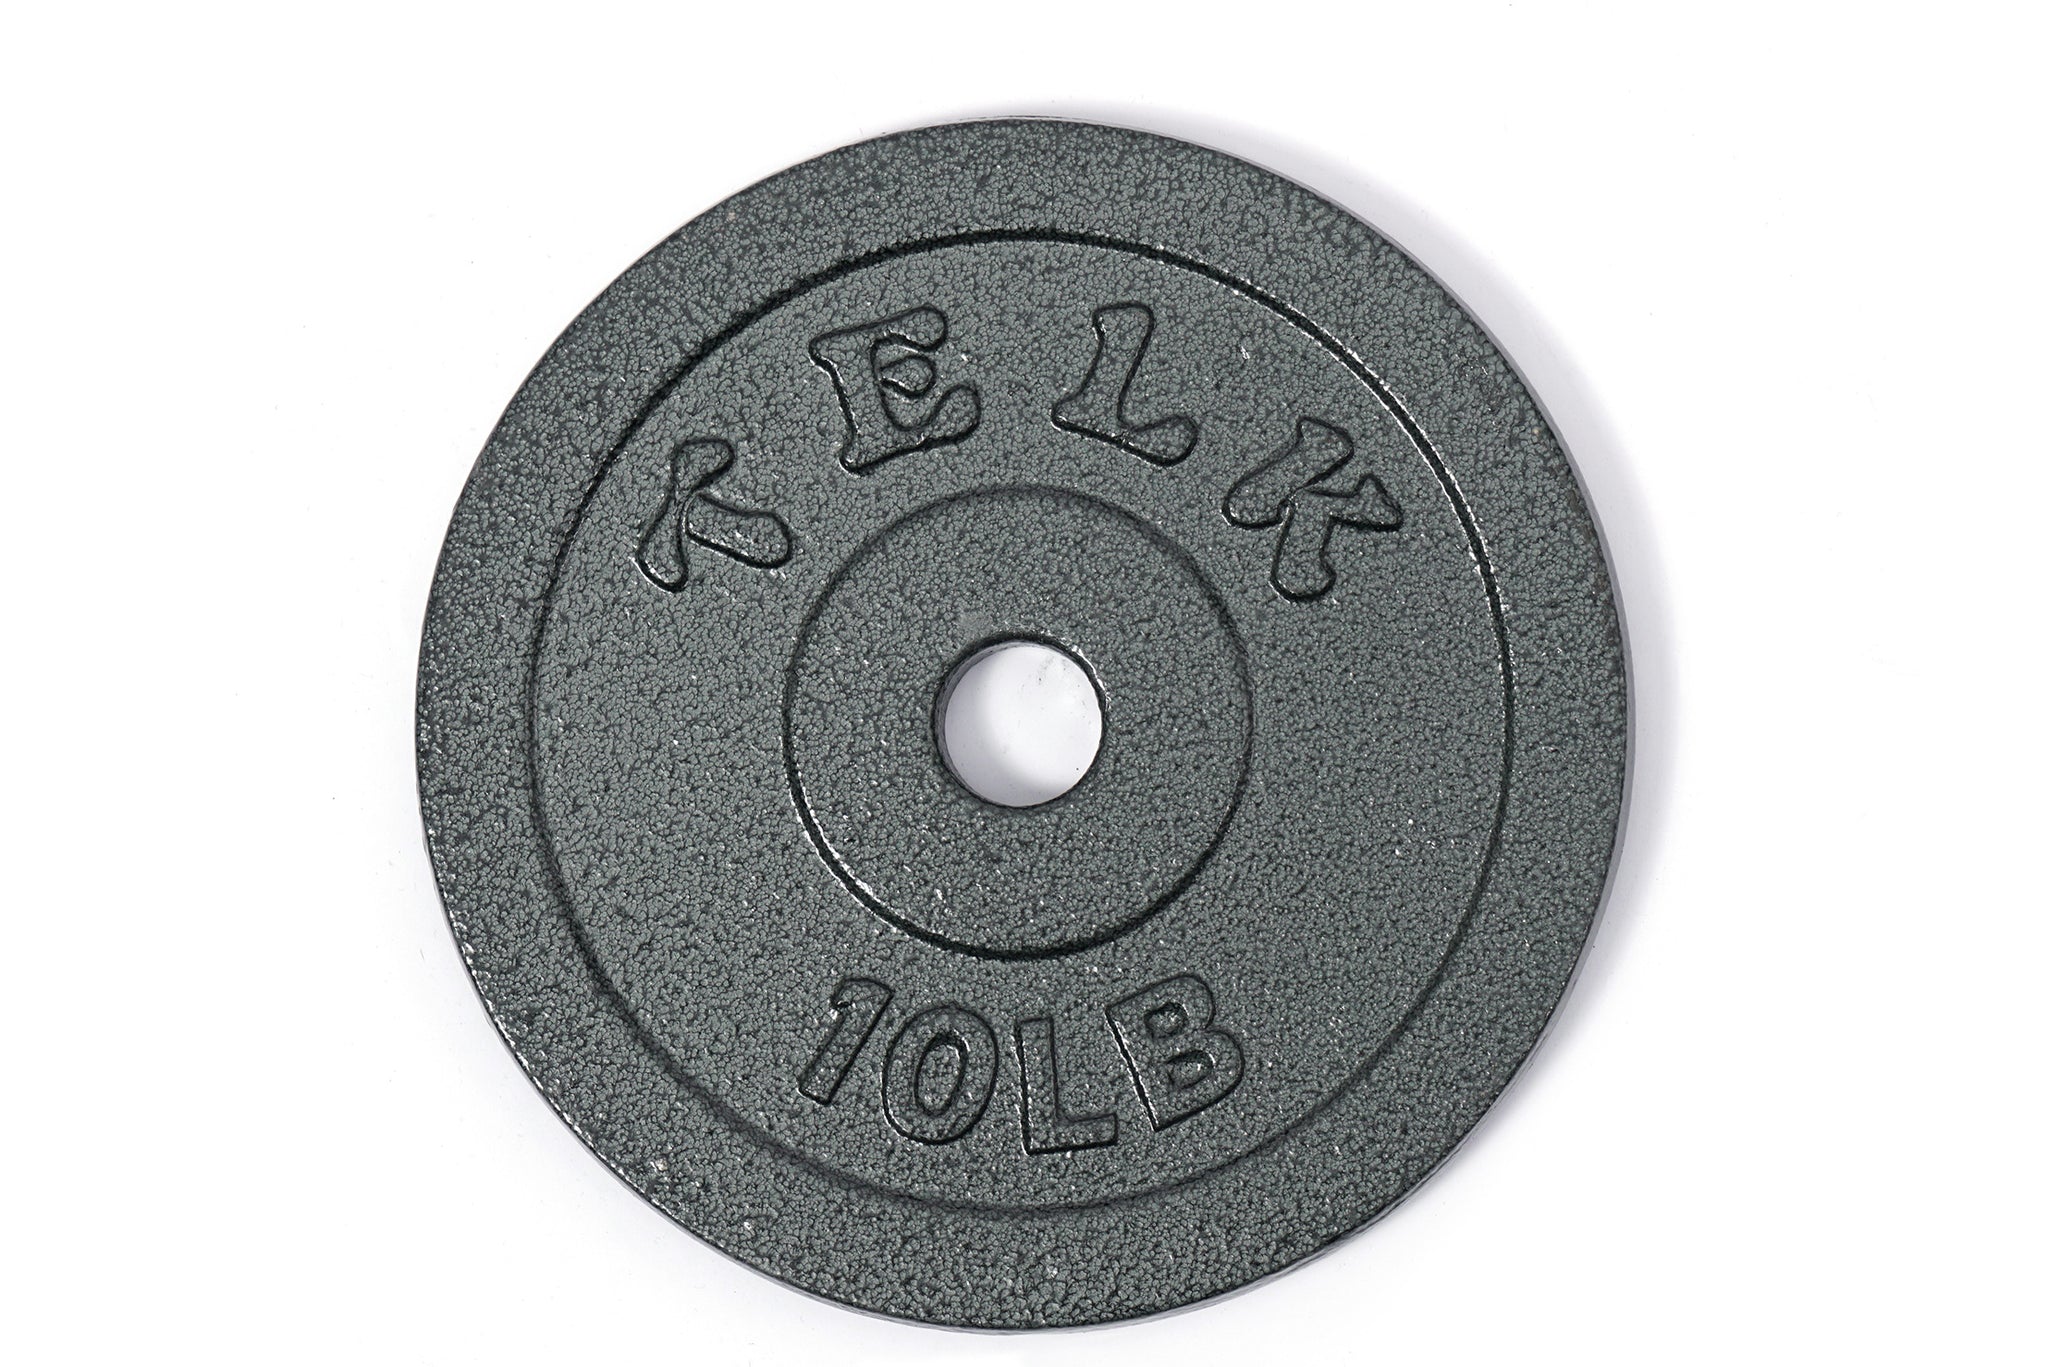 10 Ibs Set of FOUR 10 lbs. plates - TELK plate 100% cast iron weightpl